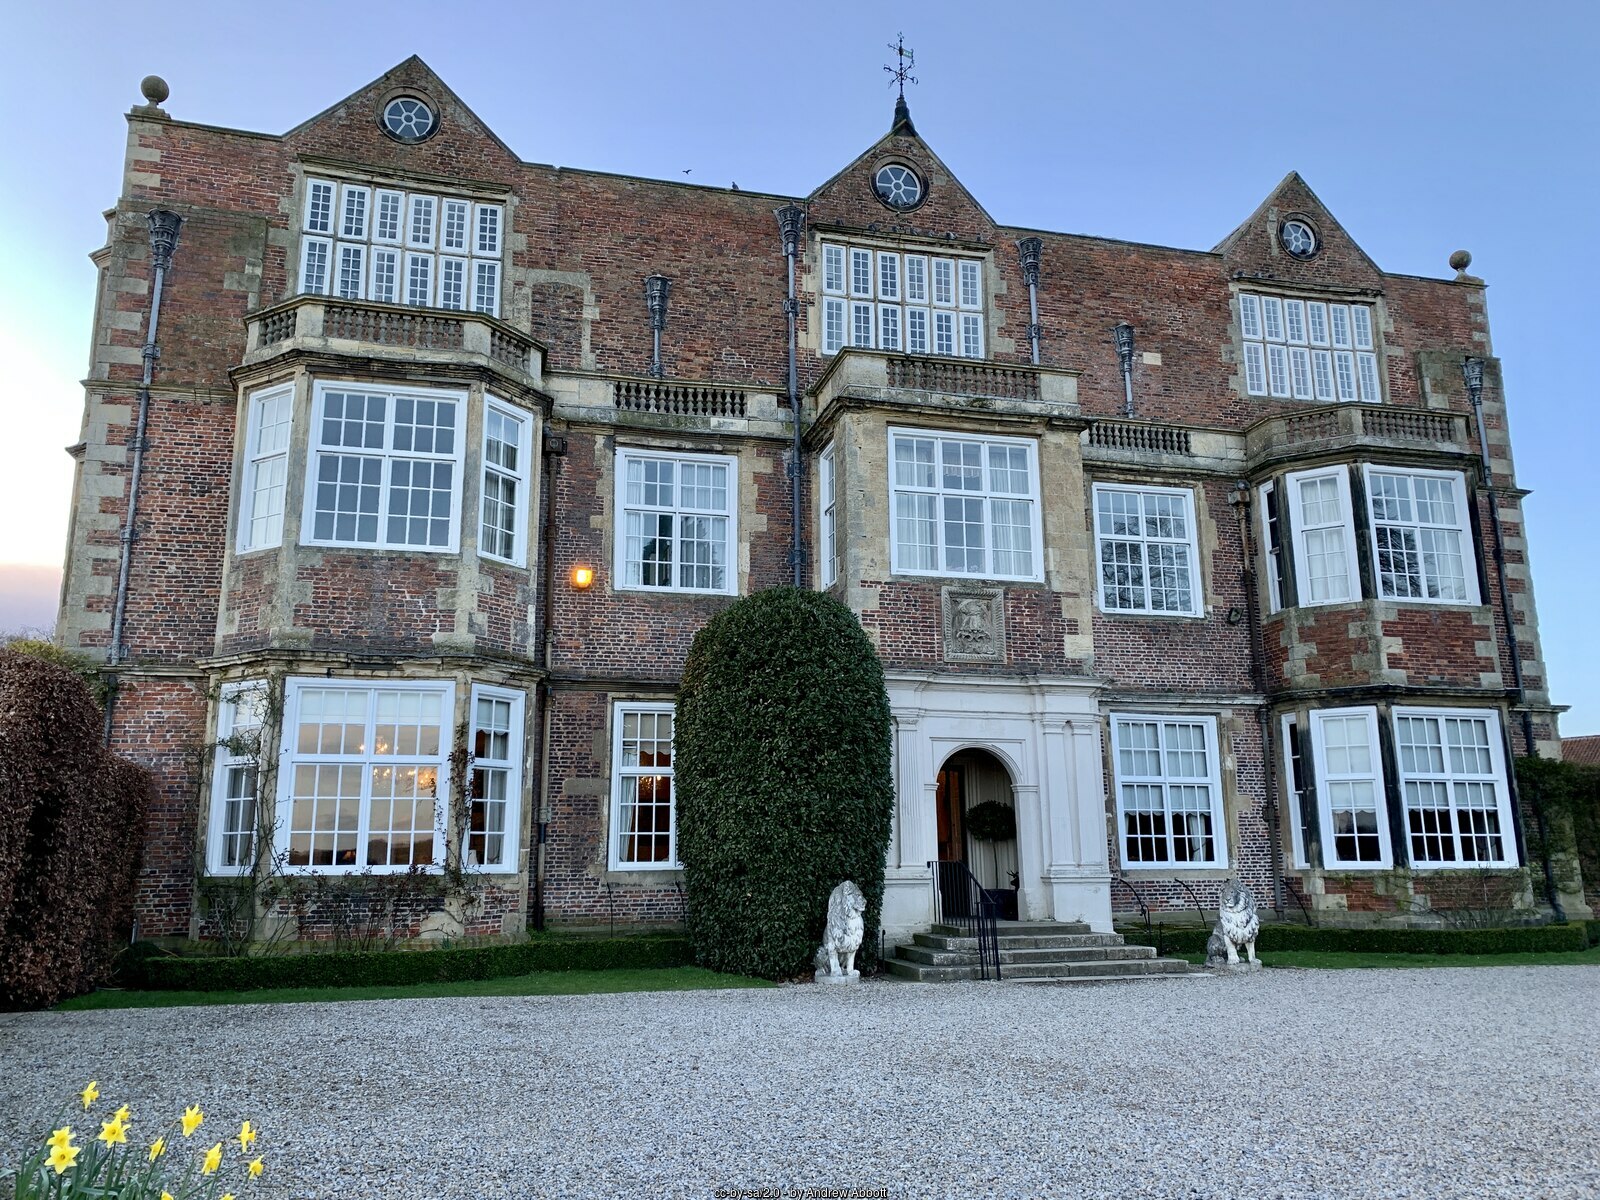 Goldsborough Hall near Knaresborough